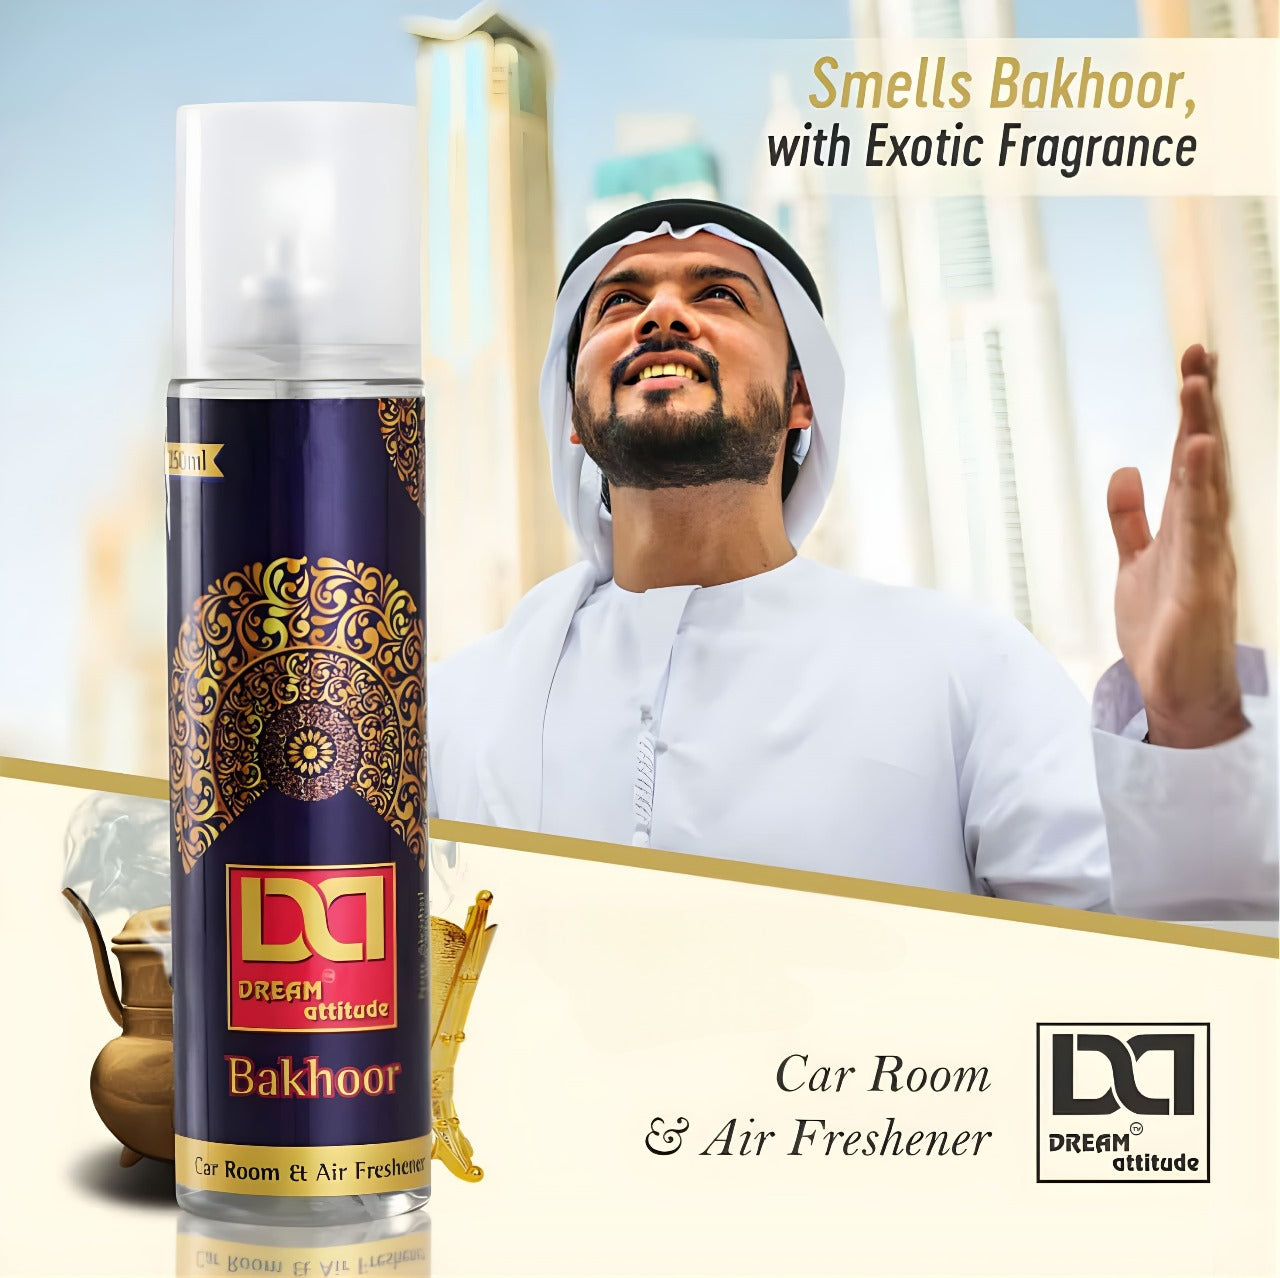 Bakhoor Air Freshener: Exotic Fragrance for Everyday Sophistication